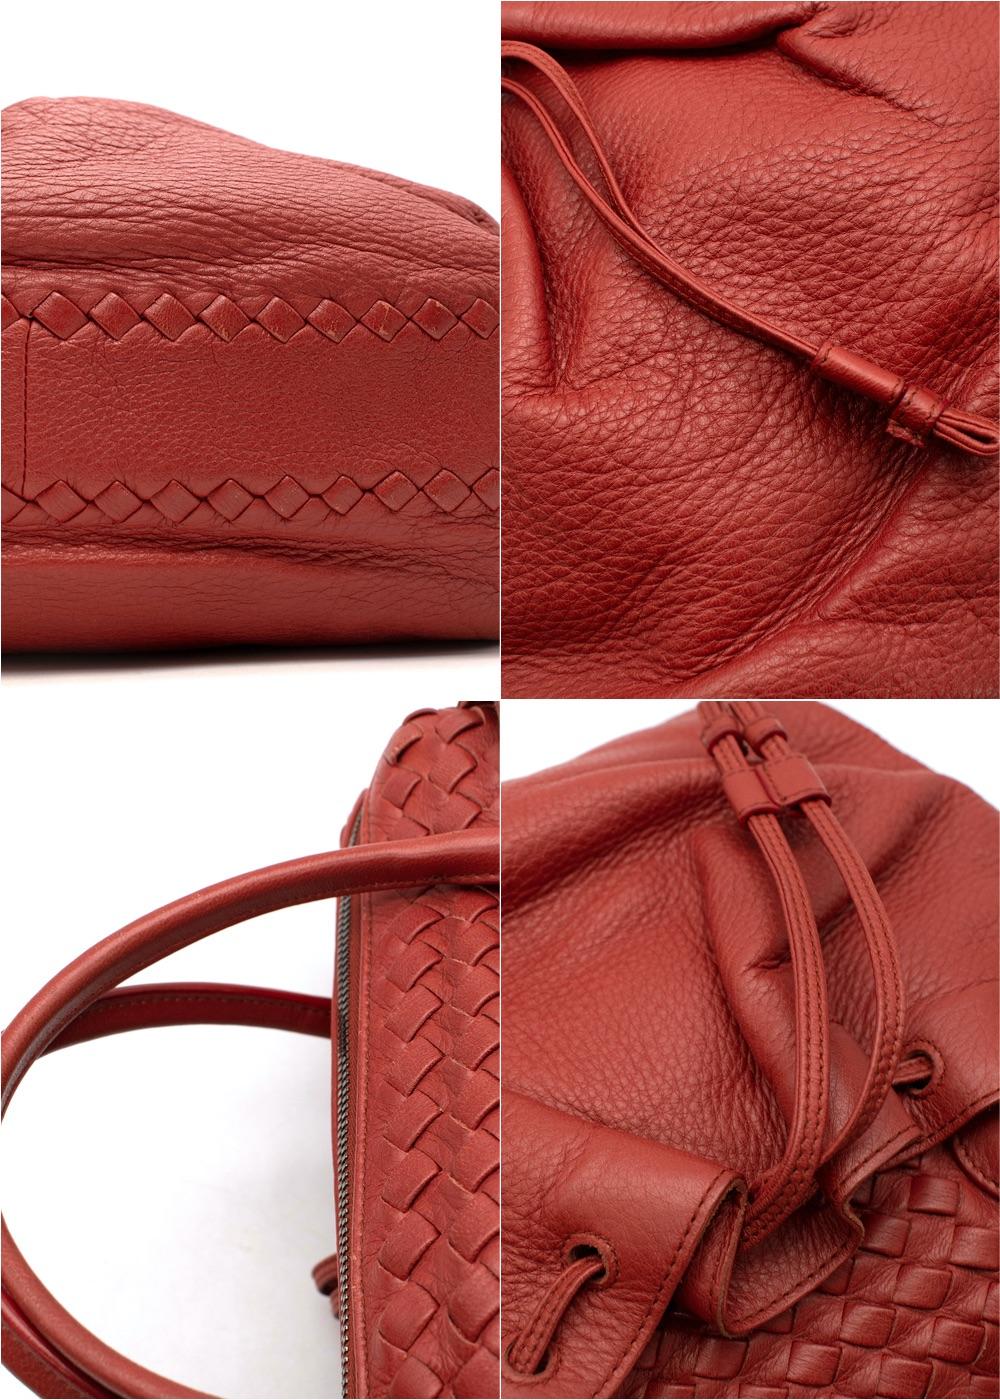 Bottega Veneta Red Leather Intrecciato Bag For Sale 1